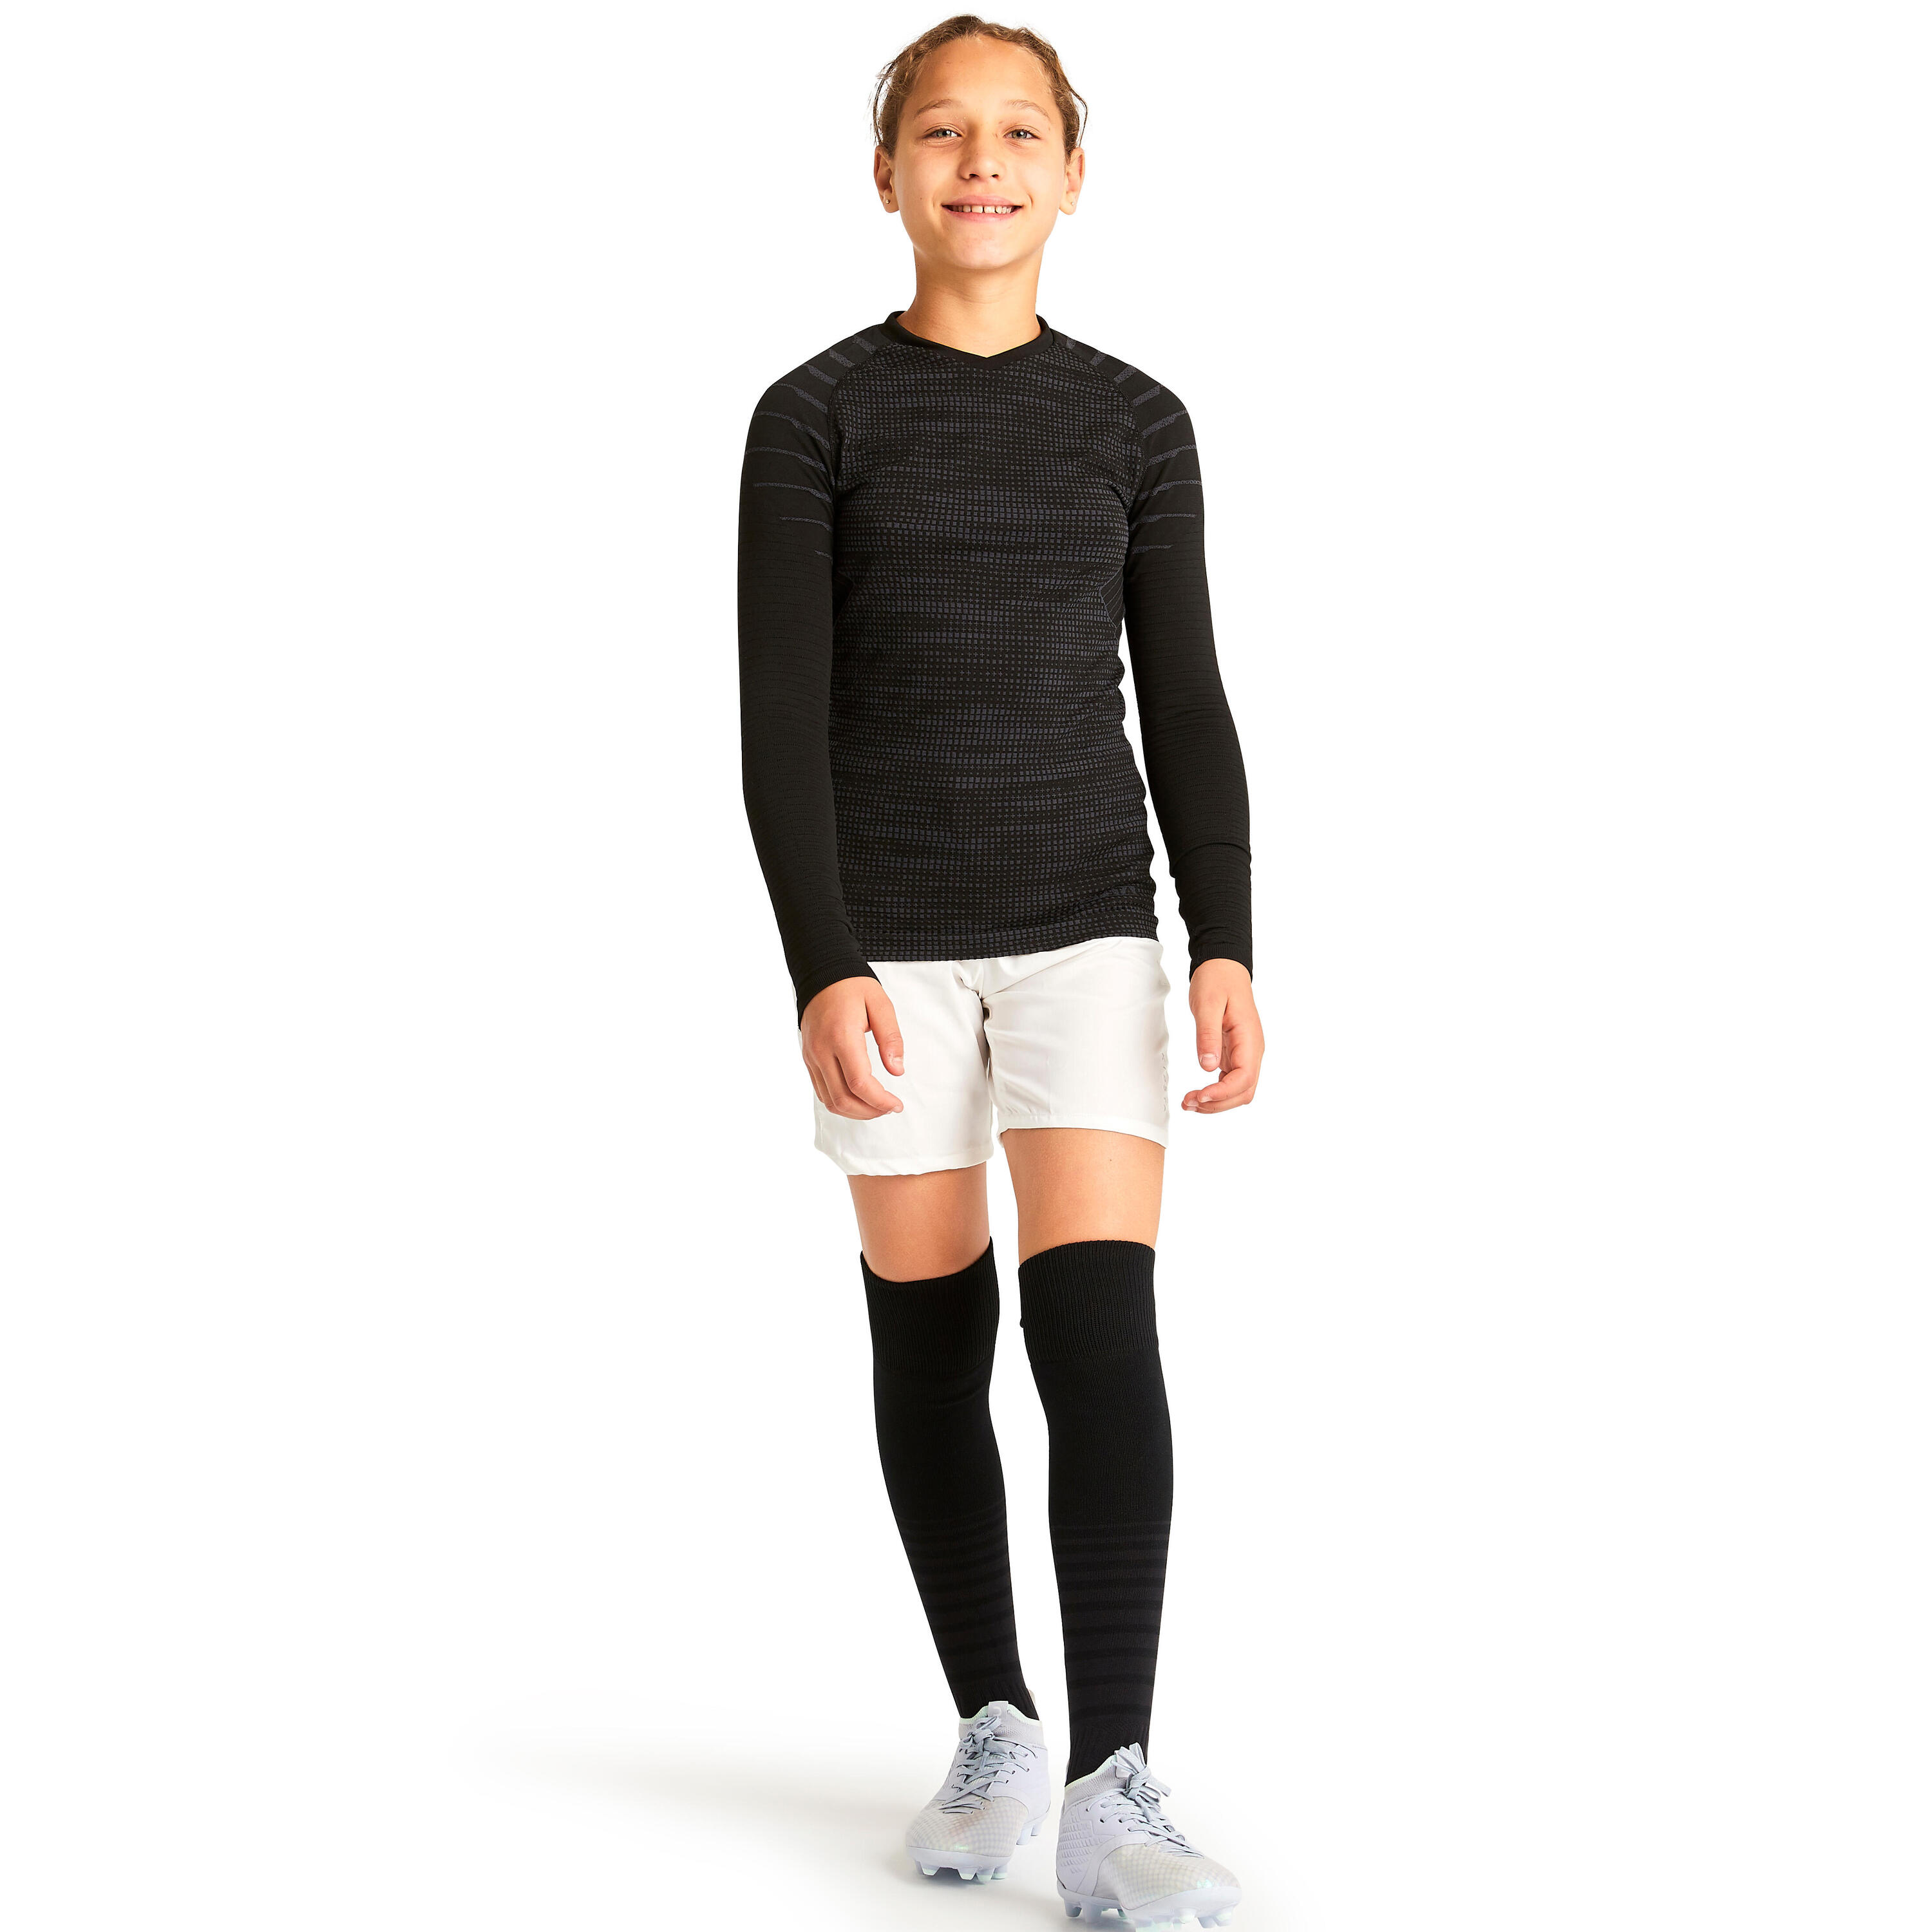 Kids' Long-Sleeved Thermal Base Layer Top Keepdry 500 - Black 5/10